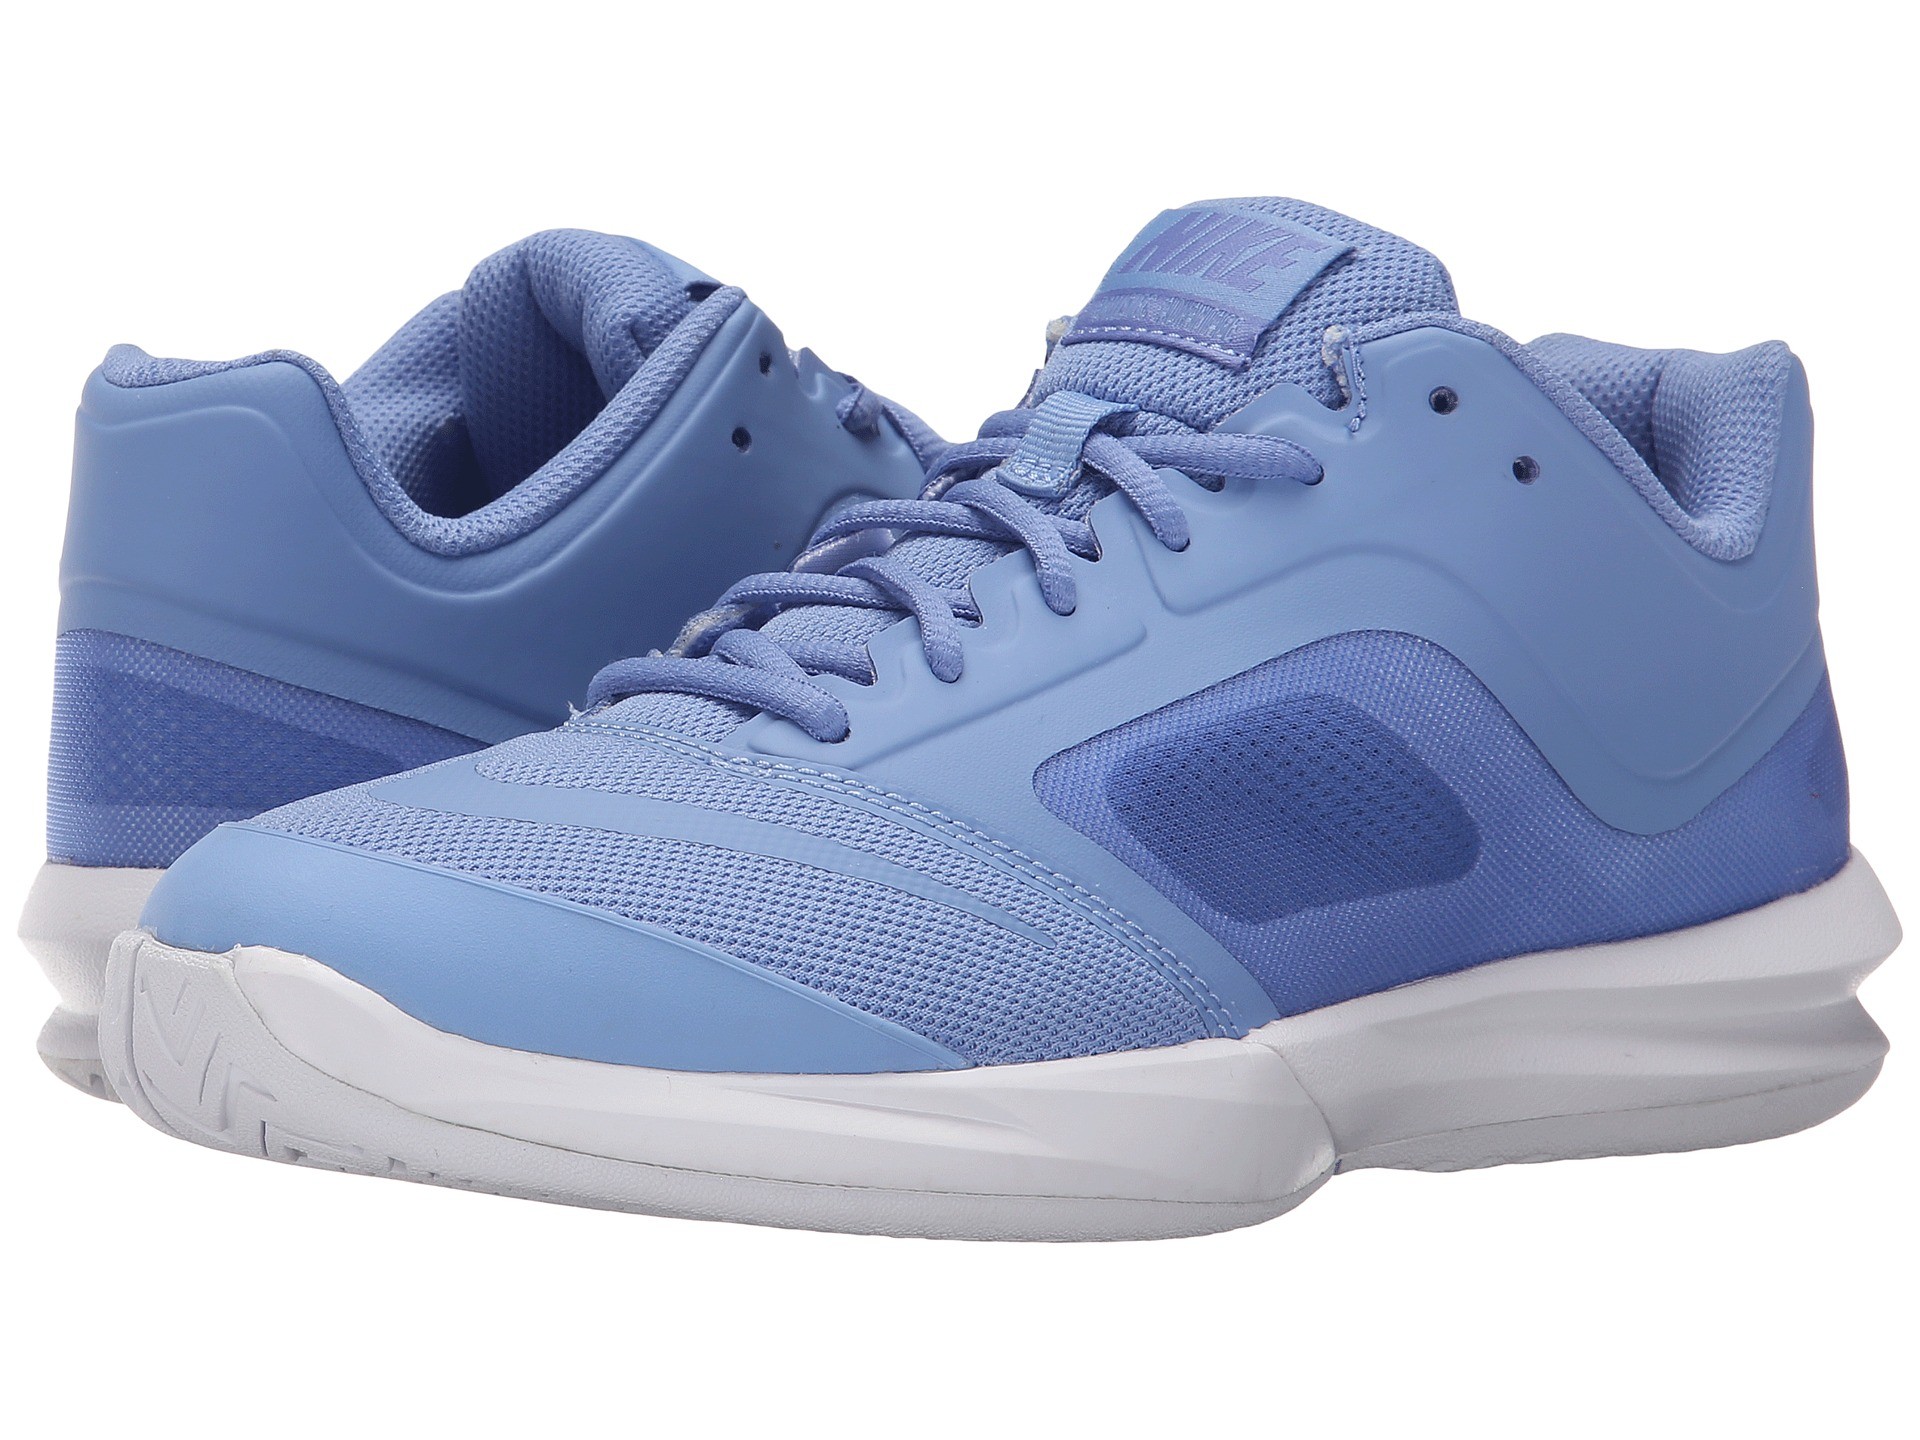 Dámská tenisová obuv Nike Ballistec Advantage blue/white UK 6 / EUR 40 / 25.5 cm